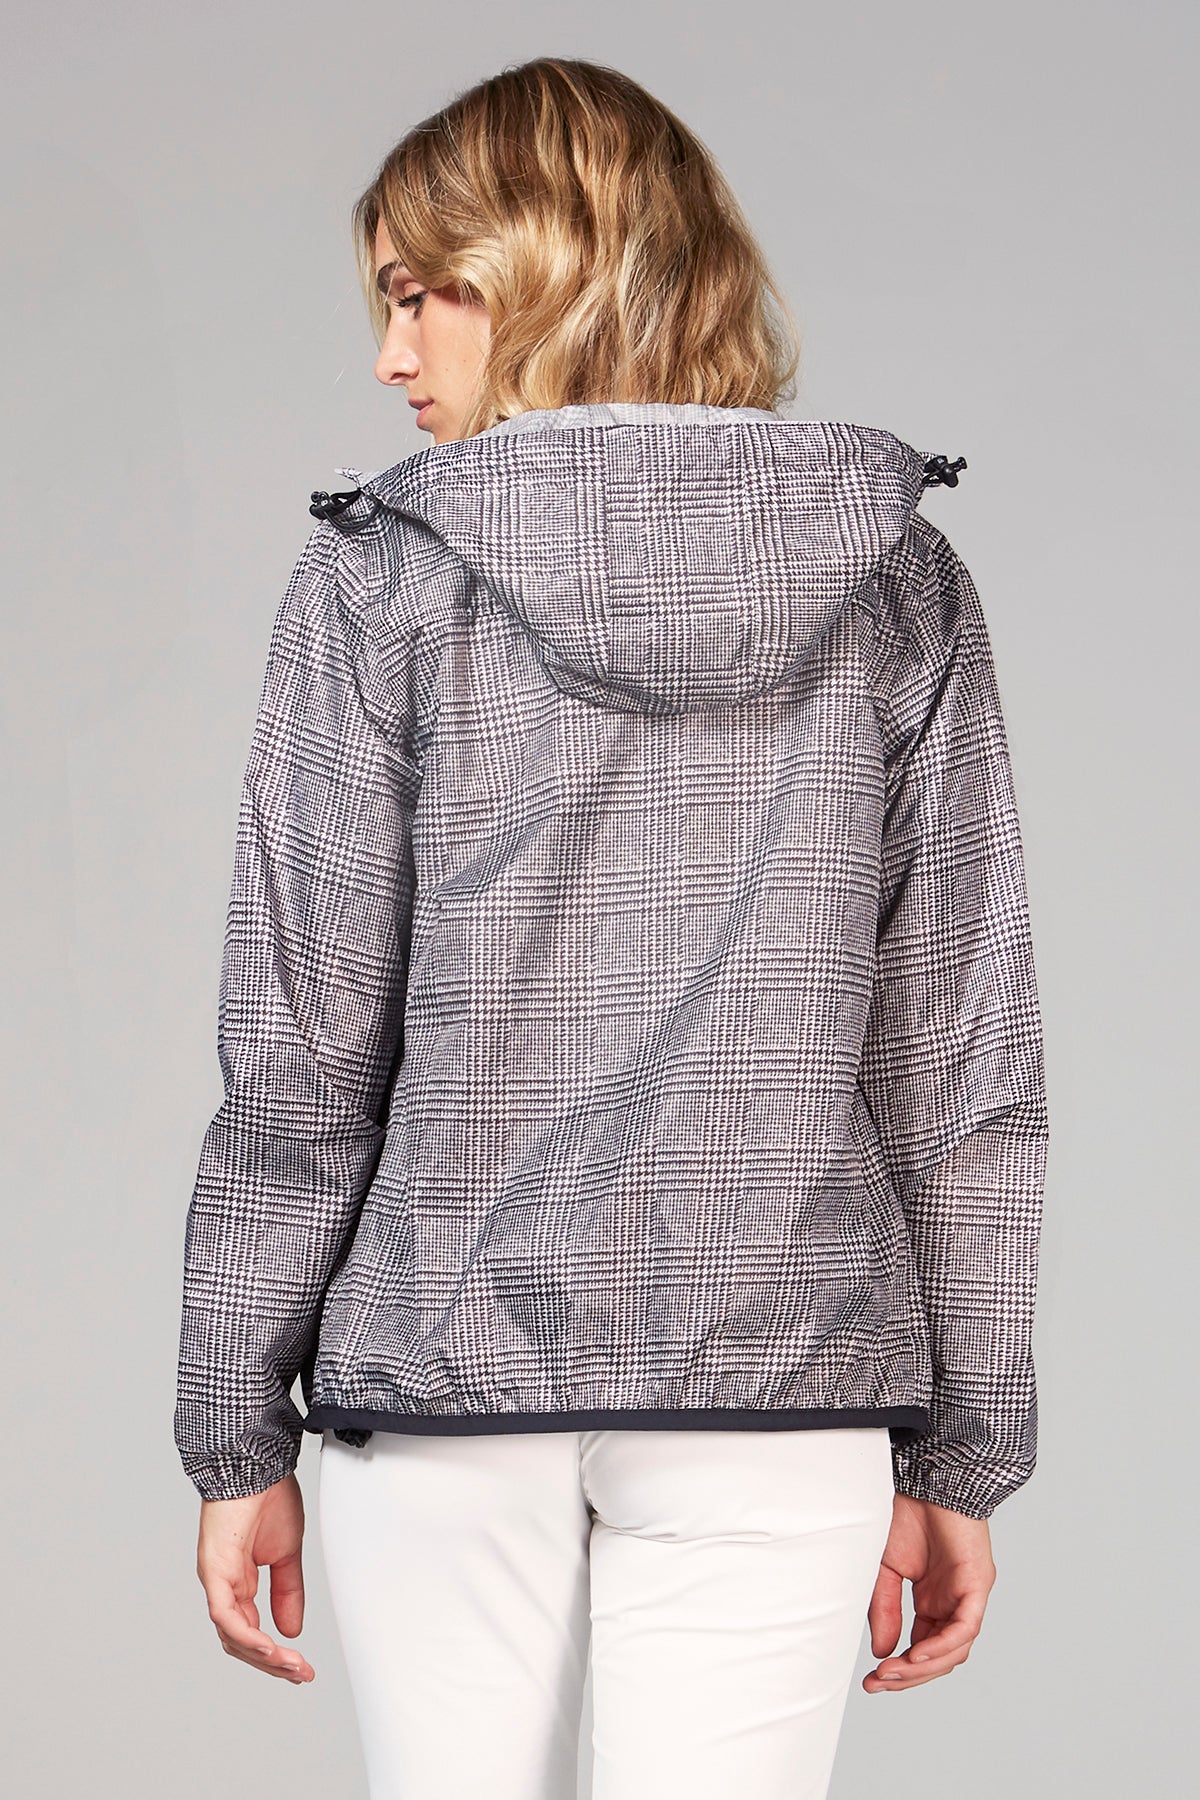 Sloane Print - plaid full zip packable rain jacket